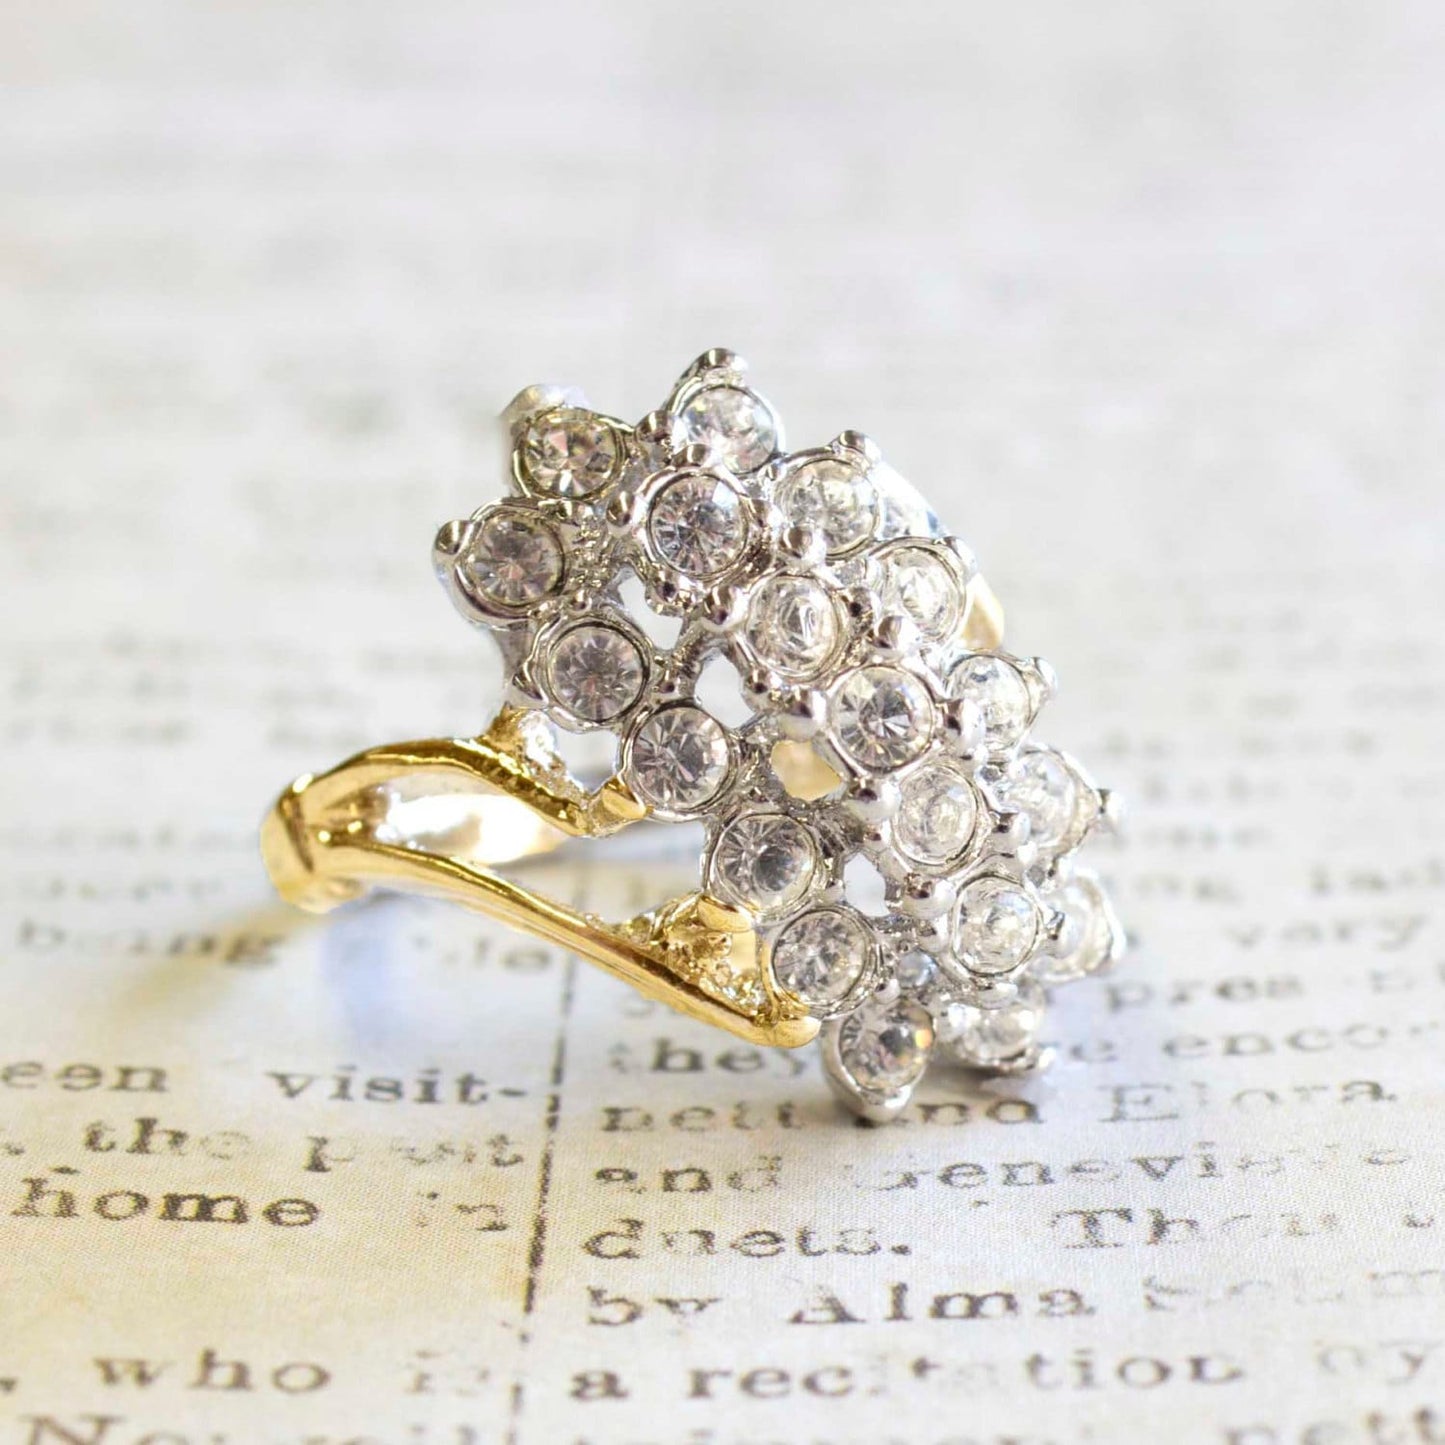 Vintage Ring Clear Swarovski Crystals 18k Gold Cluster Cocktail Ring #R175 - Limited Stock - Never Worn